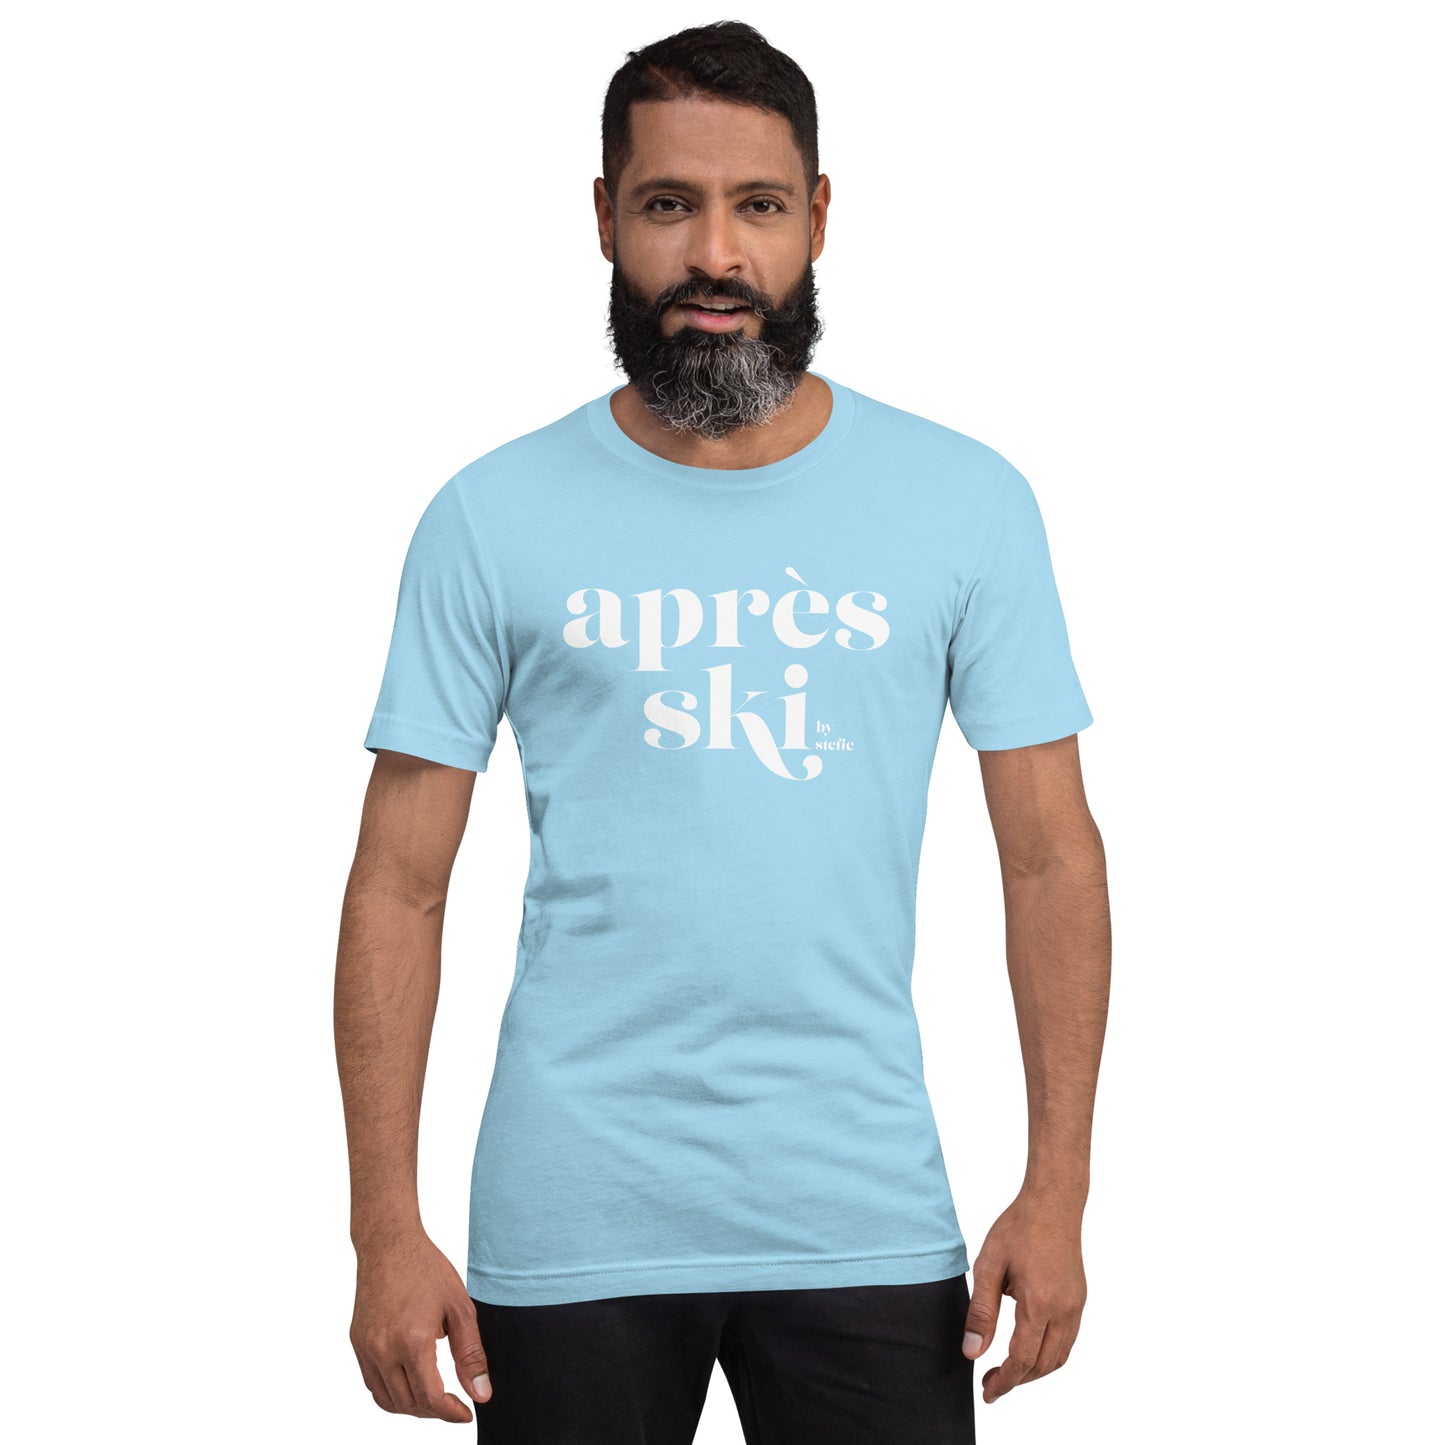 "Après Ski by Stefie" Unisex T-Shirt